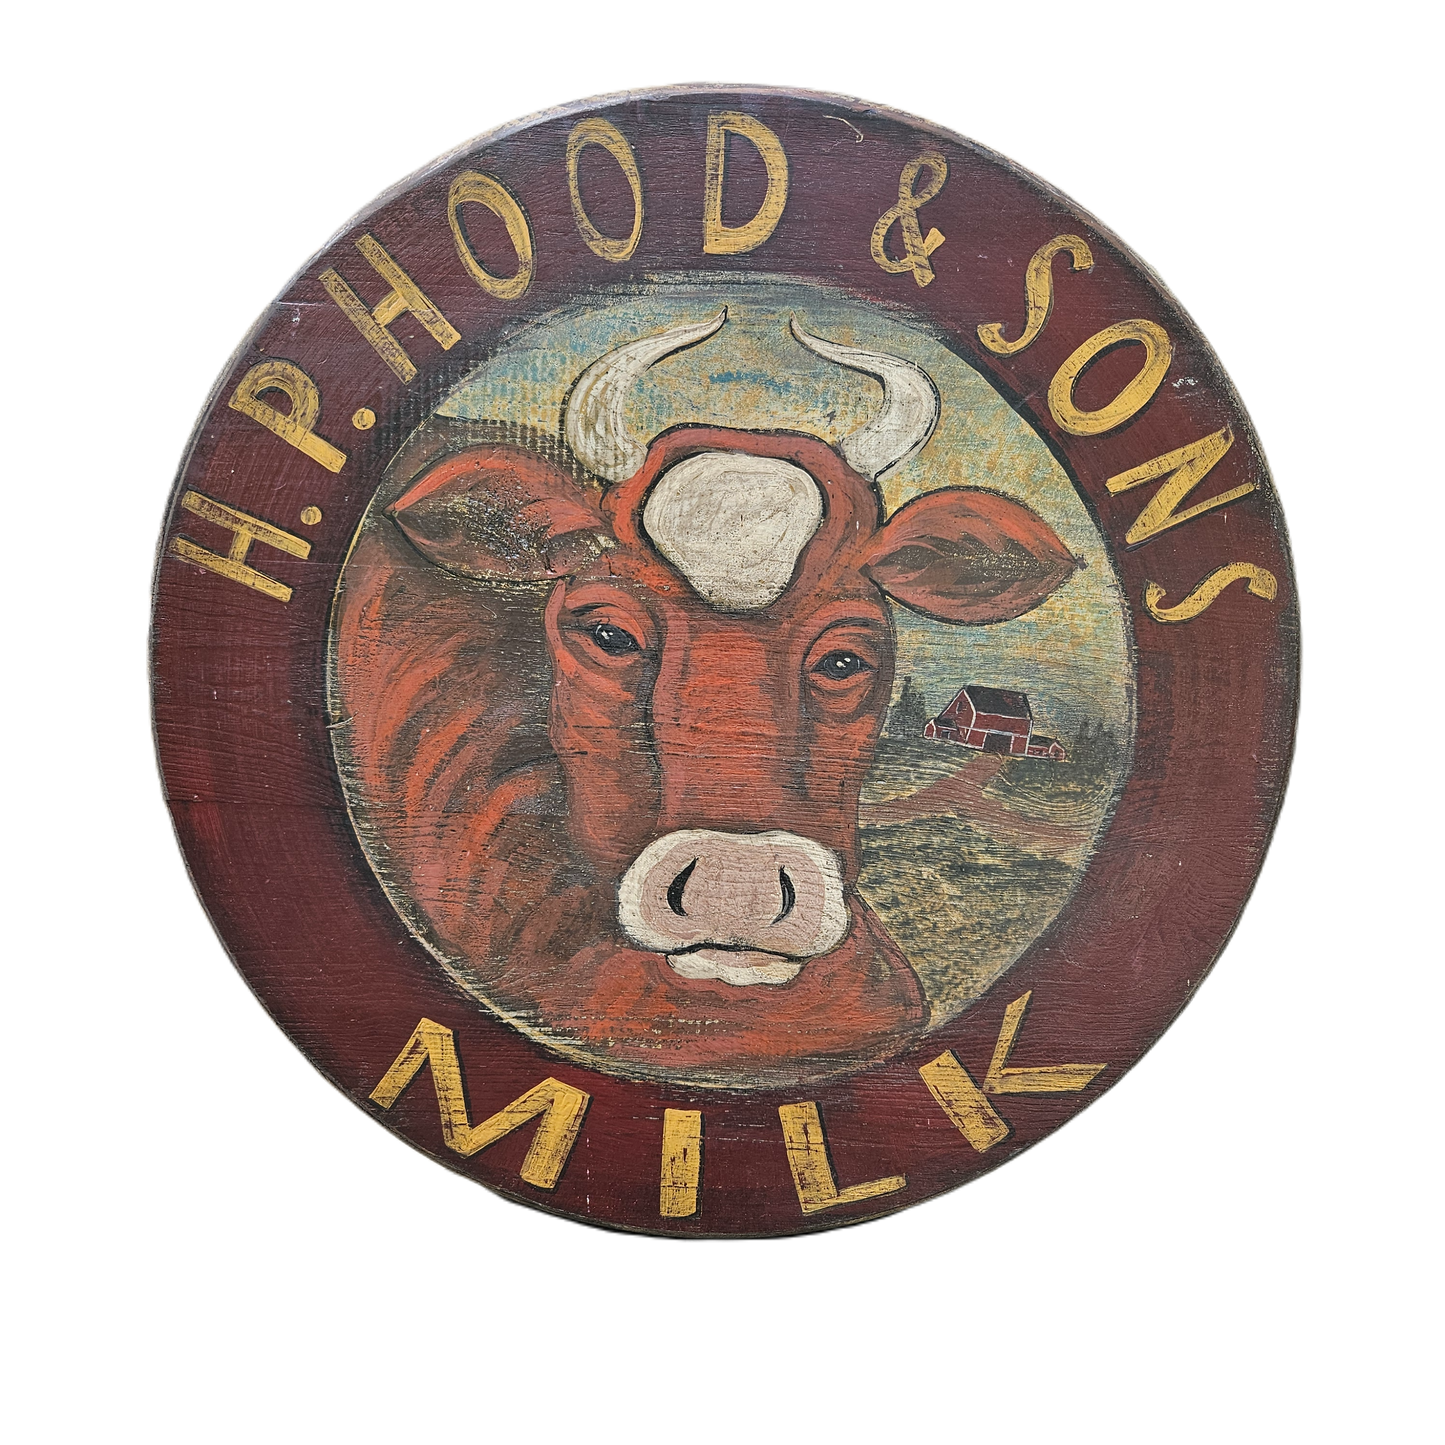 Original Kathy Graybill Folk Art Painting on Wood "H.P. Hood & Sons Farm" with Cow